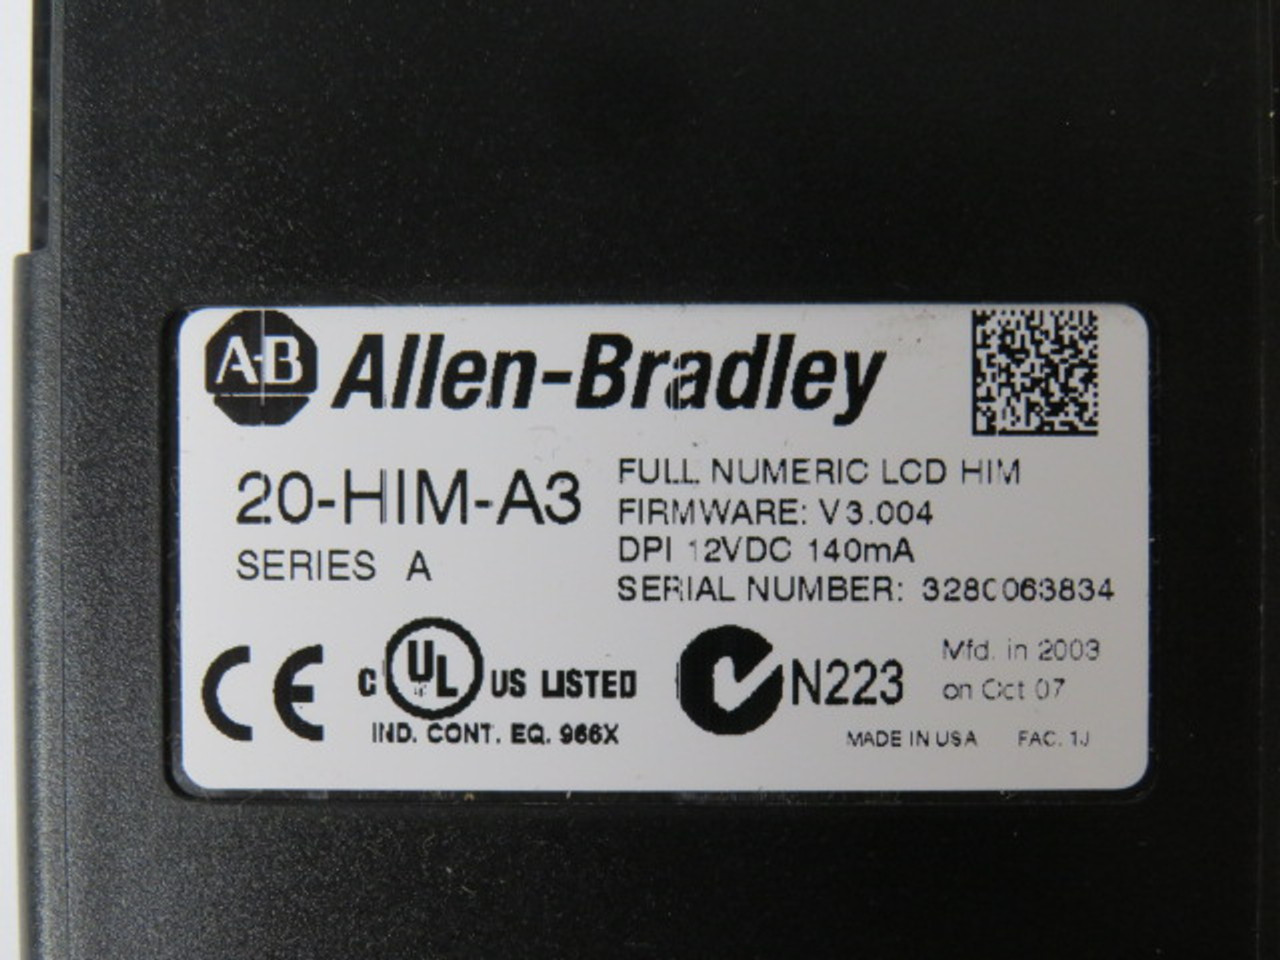 Allen-Bradley 20-HIM-A3 Full Numeric LCD Keypad Series A Firmware V3.004 USED